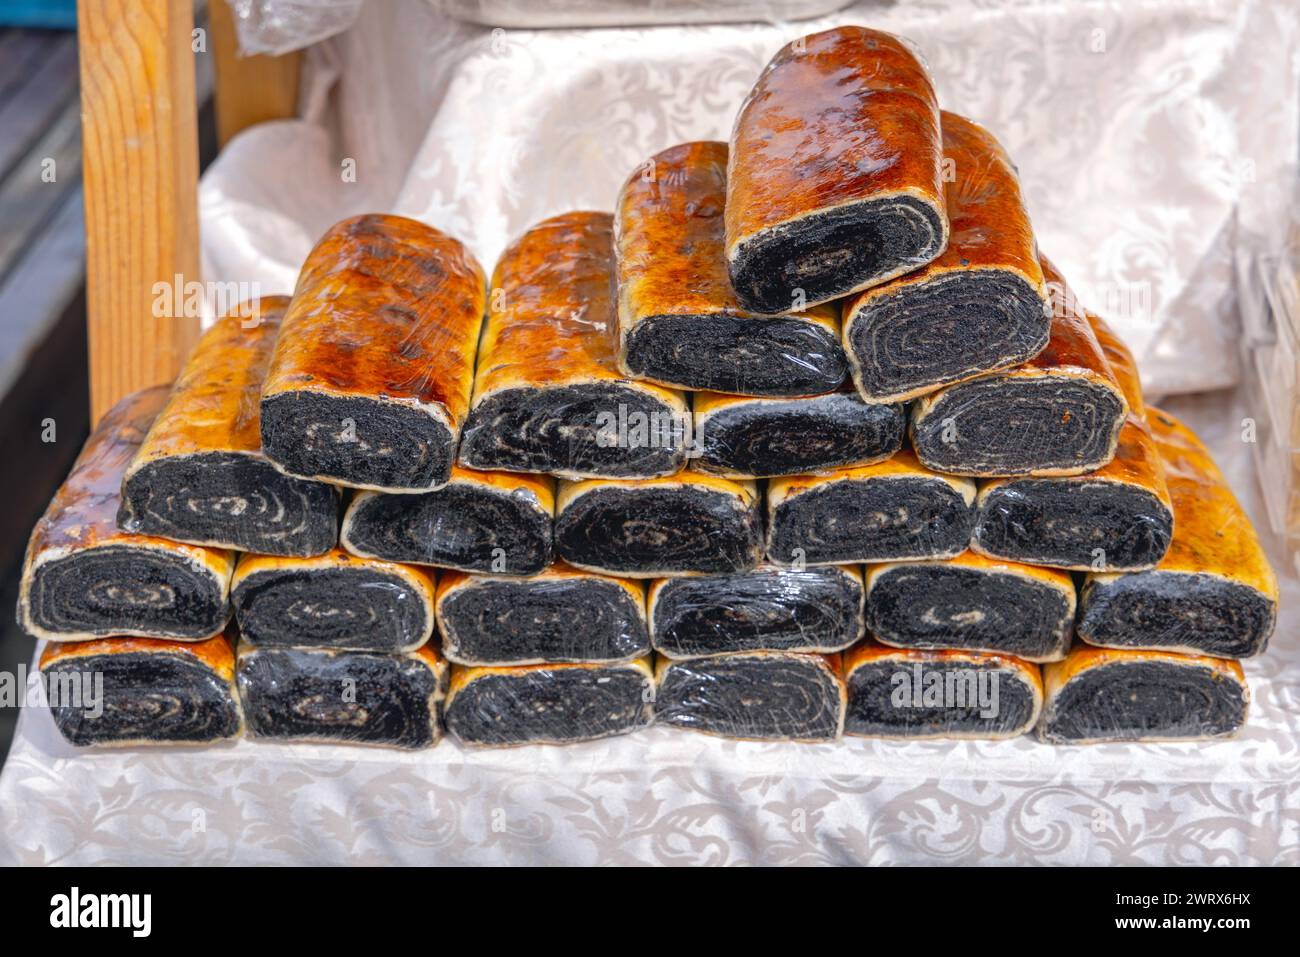 Stacks of Black Poppy Seed Cakes at Farmers Market Stock Photo